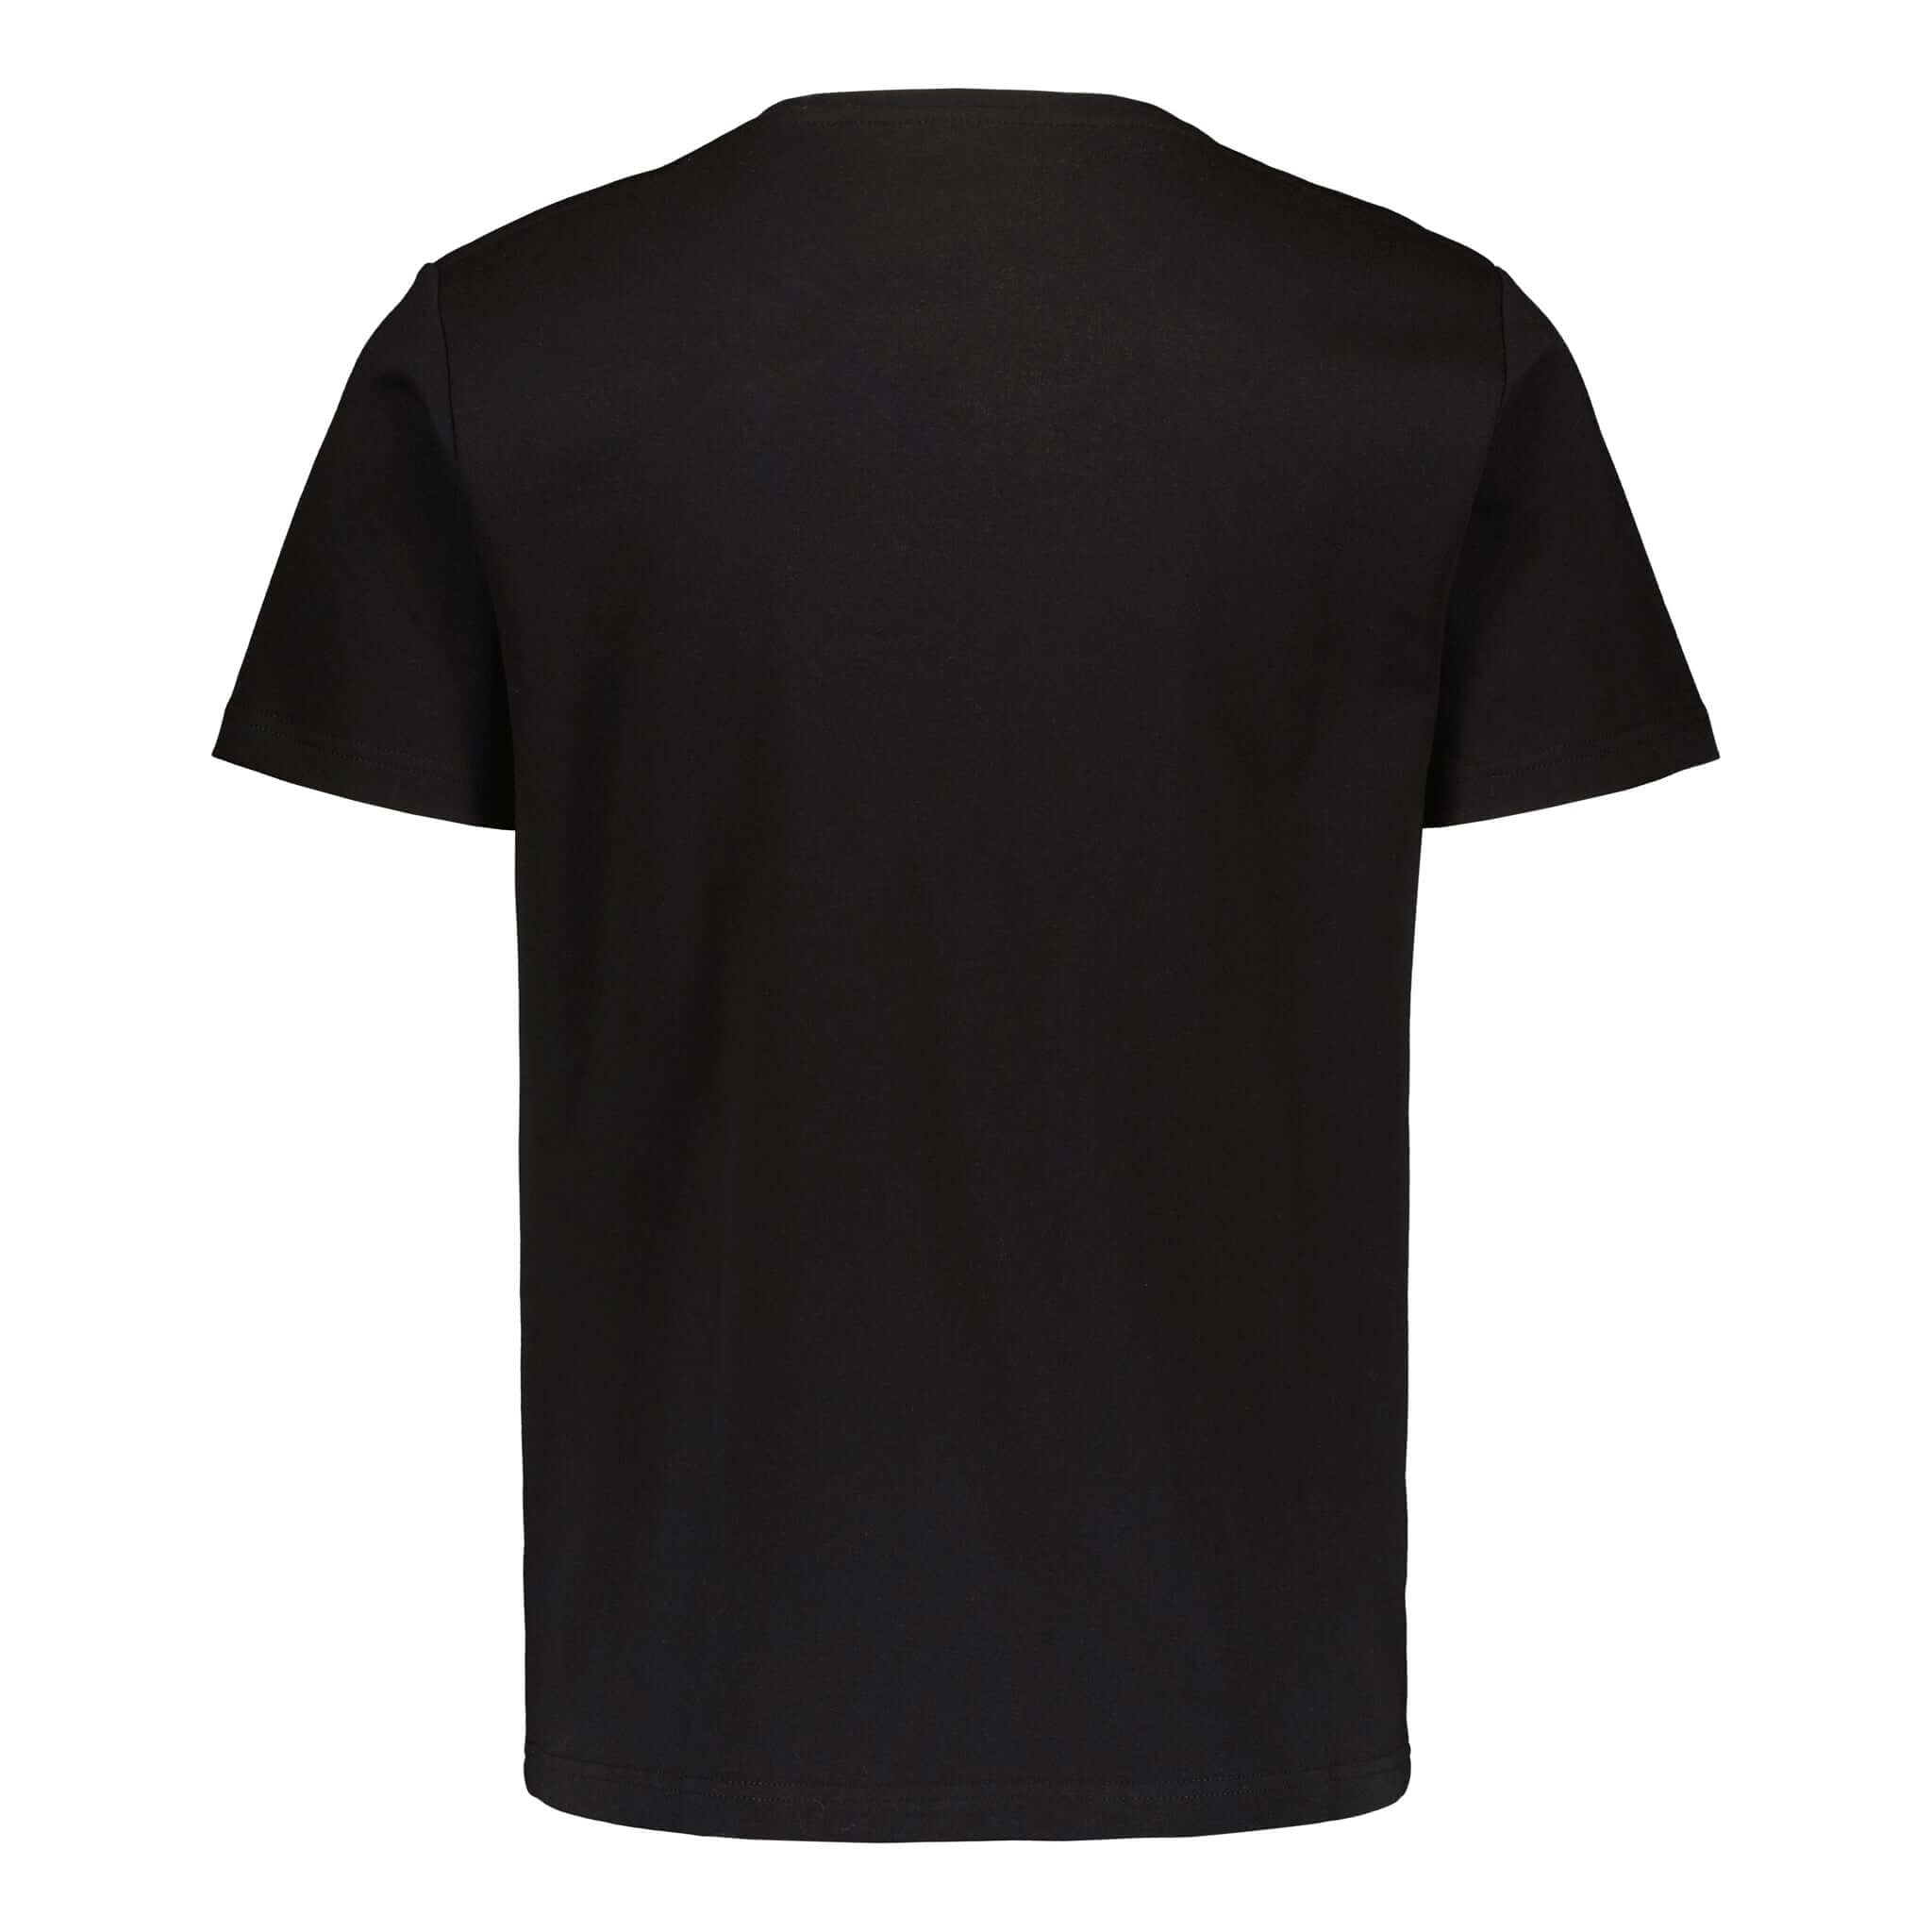 ENCE B/W Logo T-Shirt - ENCE Shop